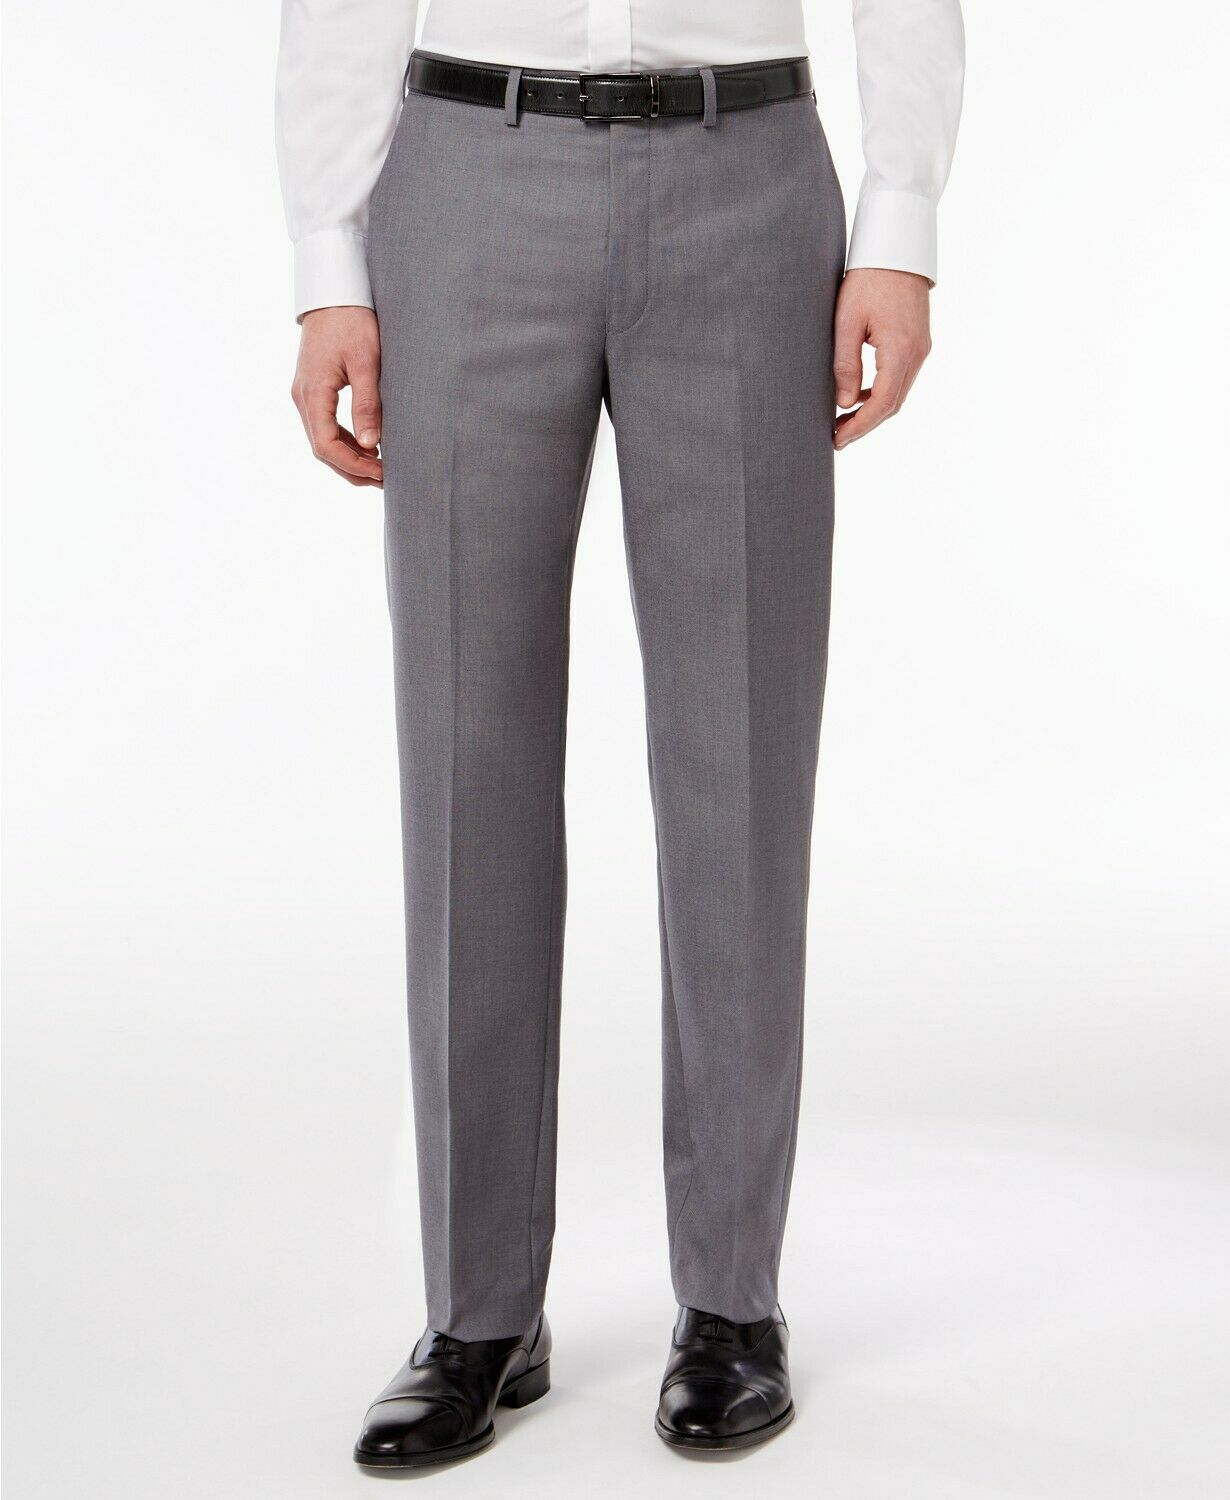 Calvin Klein Slim-Fit Solid Dress Pants 36 x 29 GREY WASHABLE